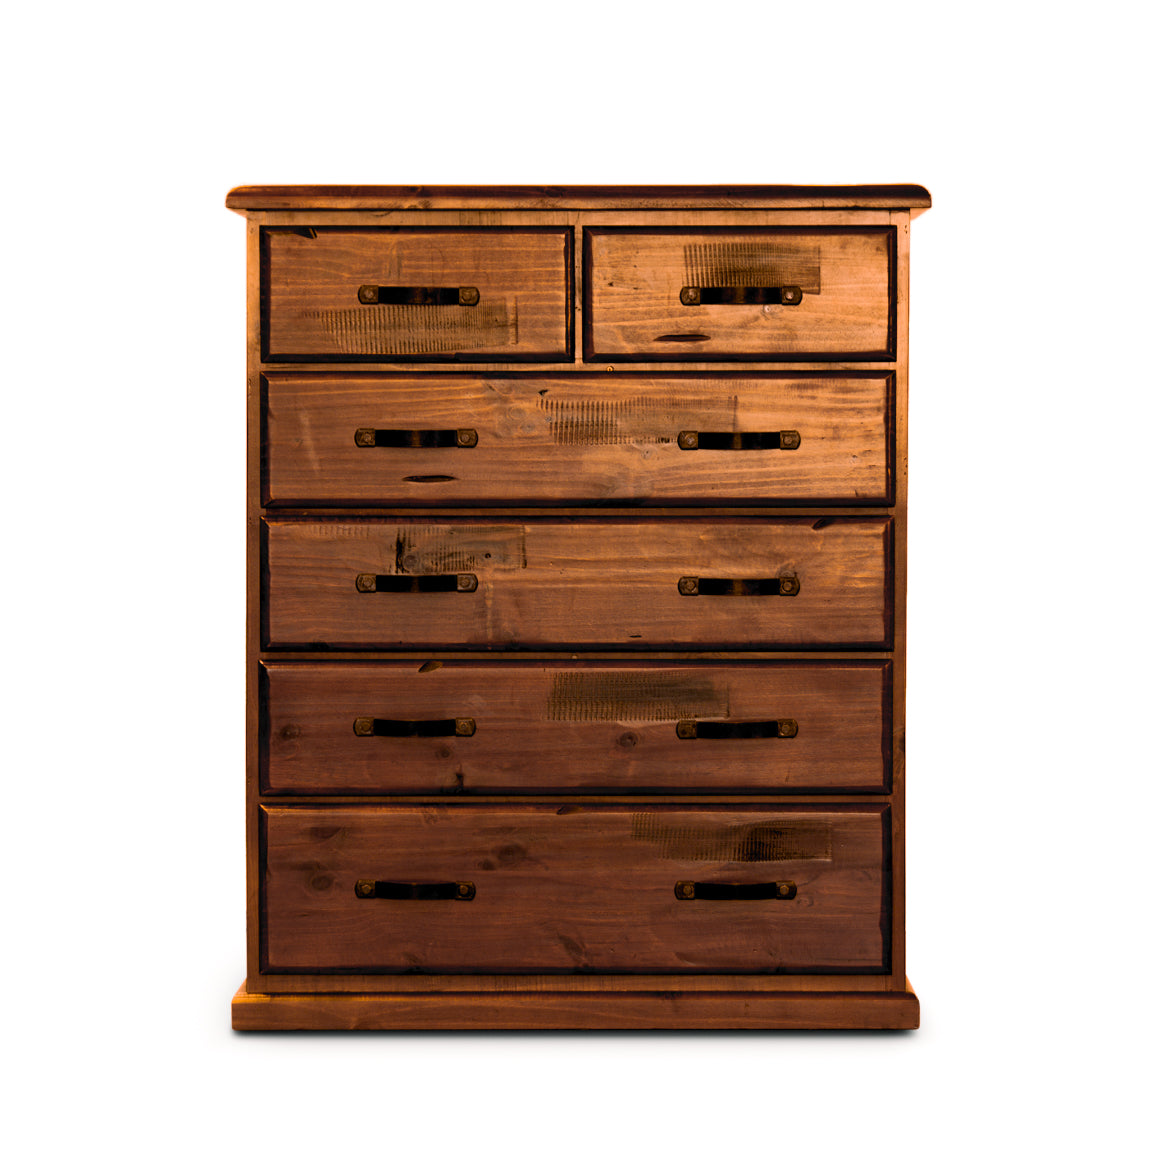 6 Chest of Drawers Solid Pine Wood Storage Cabinet - Dark Brown